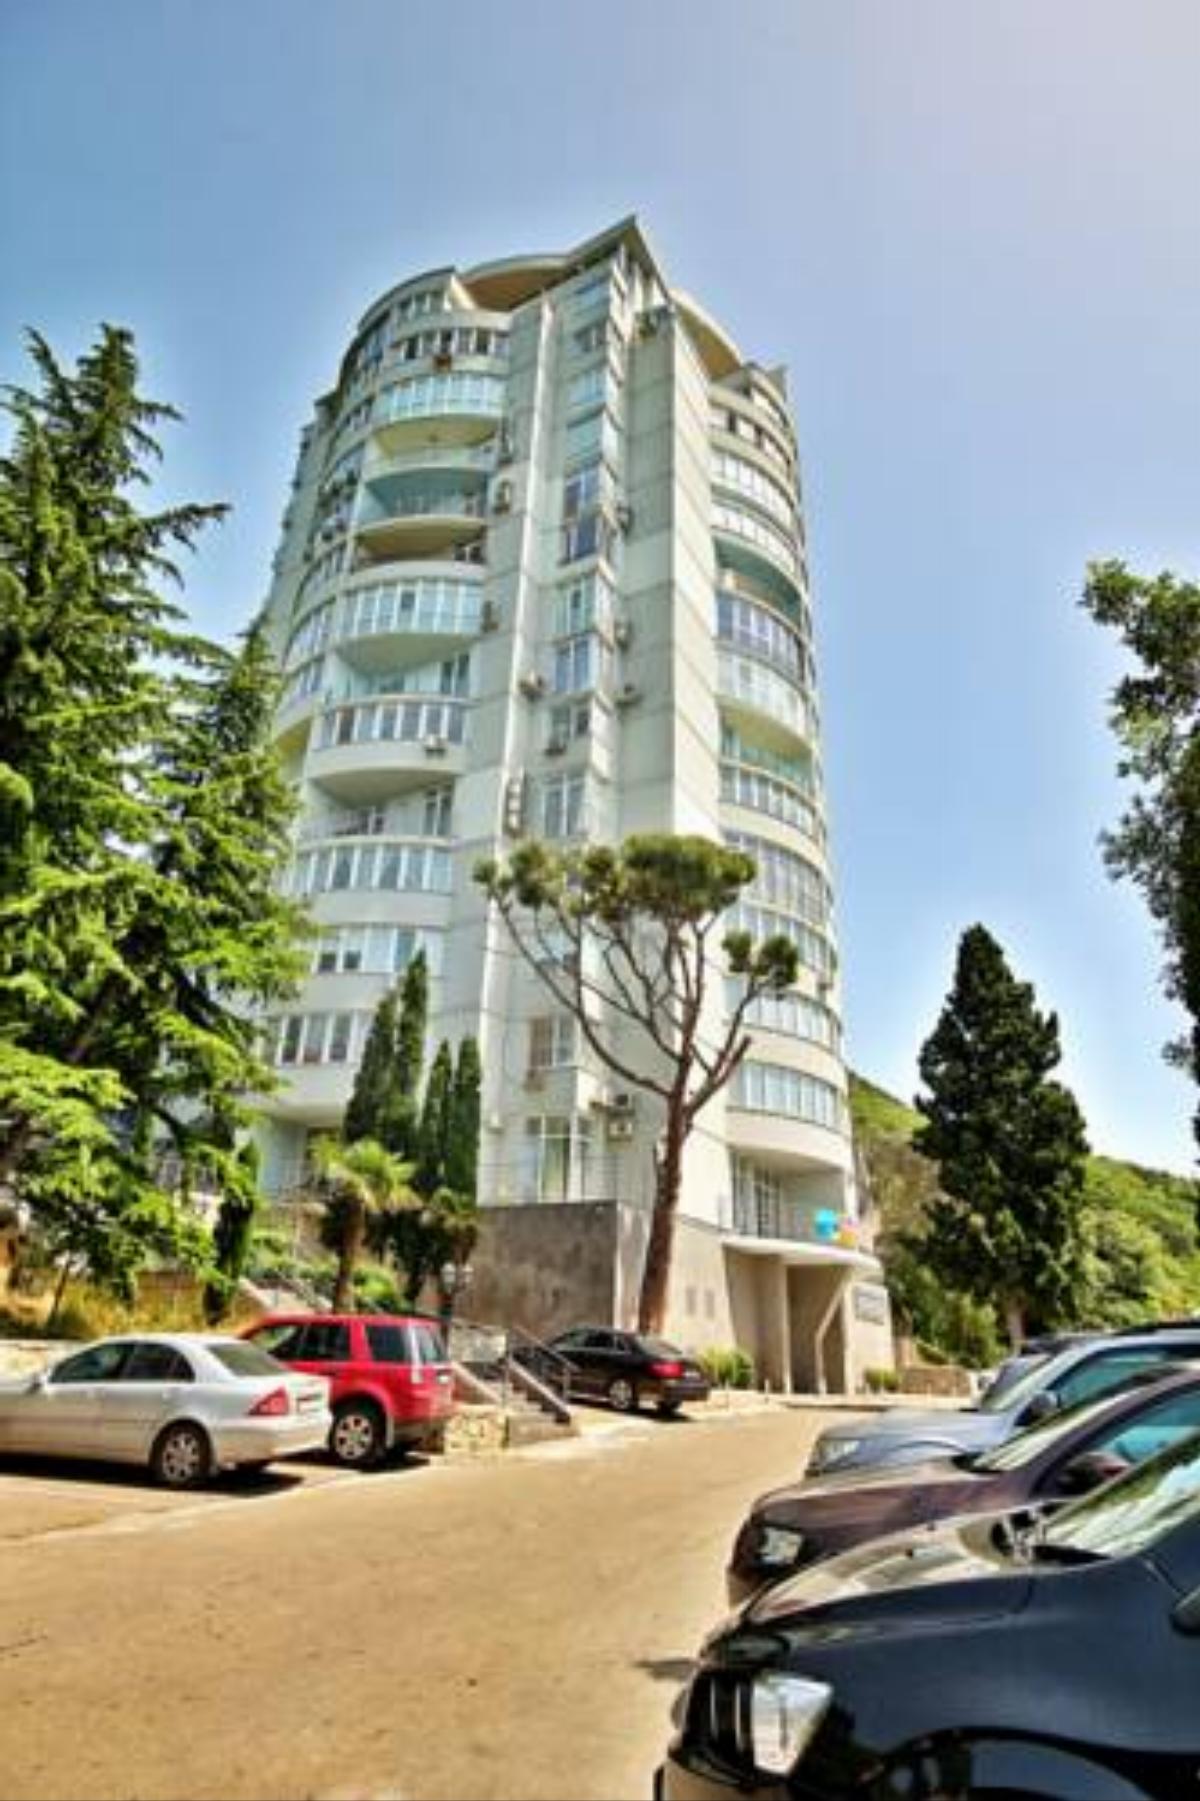 Yuzhnaya Palmira Hotel Kurpaty Crimea